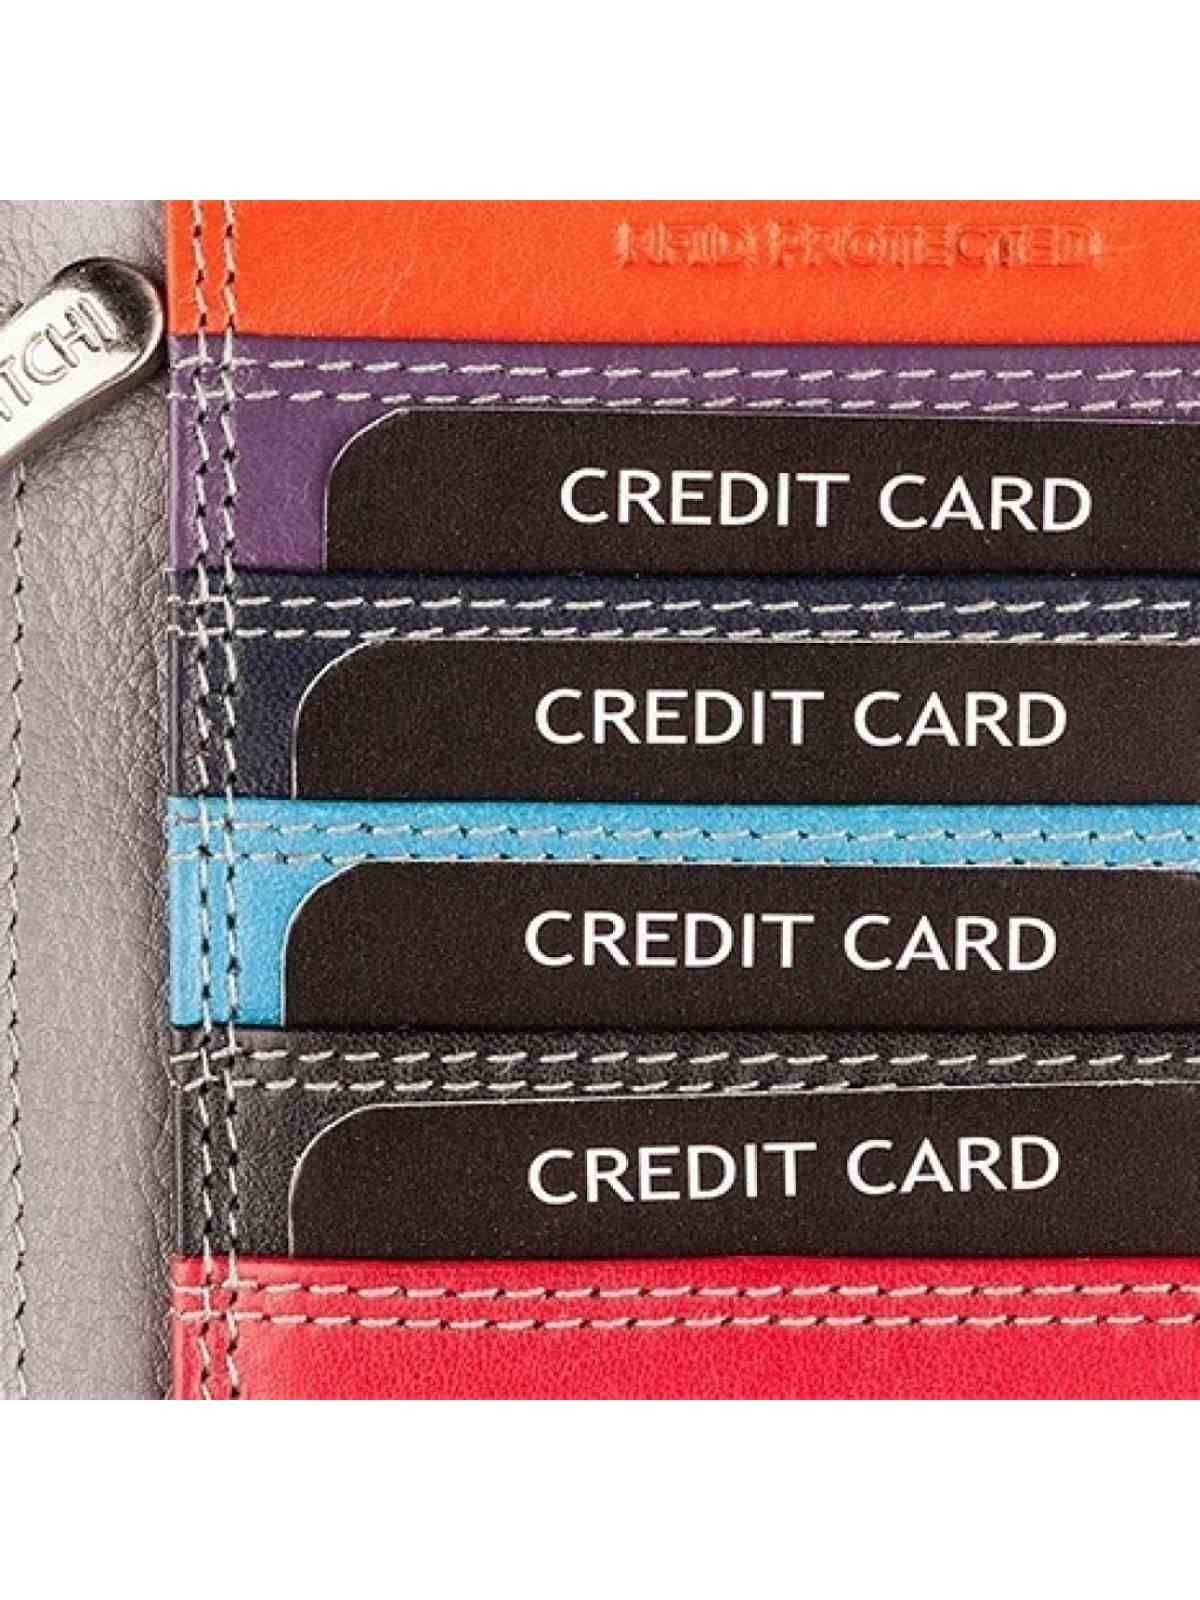 Patchi Ledergeldbörse Wallet L multicolor schwarz